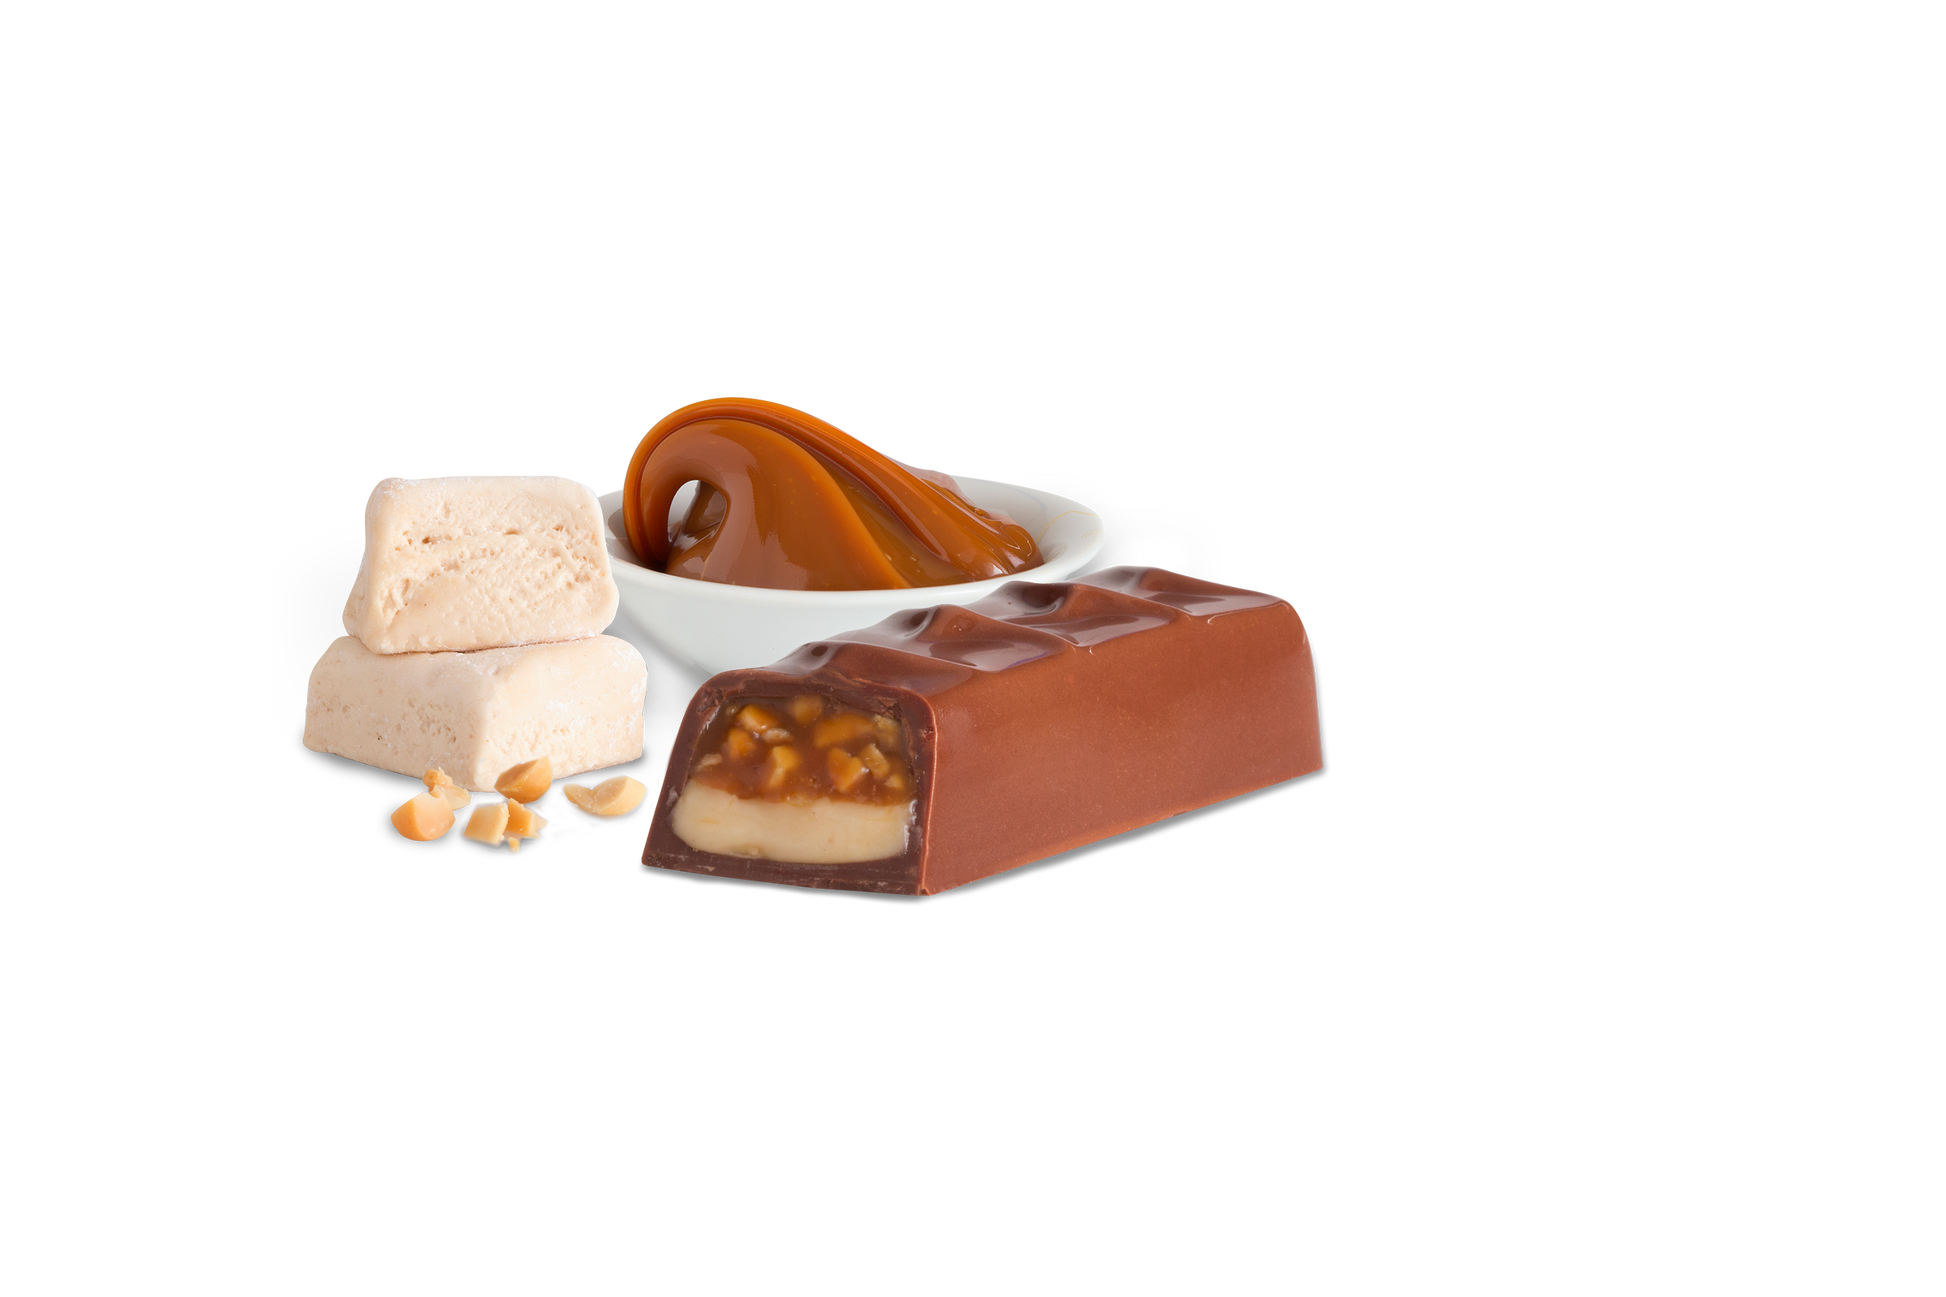 Organic Dark Chocolate Peanut Butter Bars - 12ct Bar Caddy - 8% off – OCHO  Organic Chocolate Candy